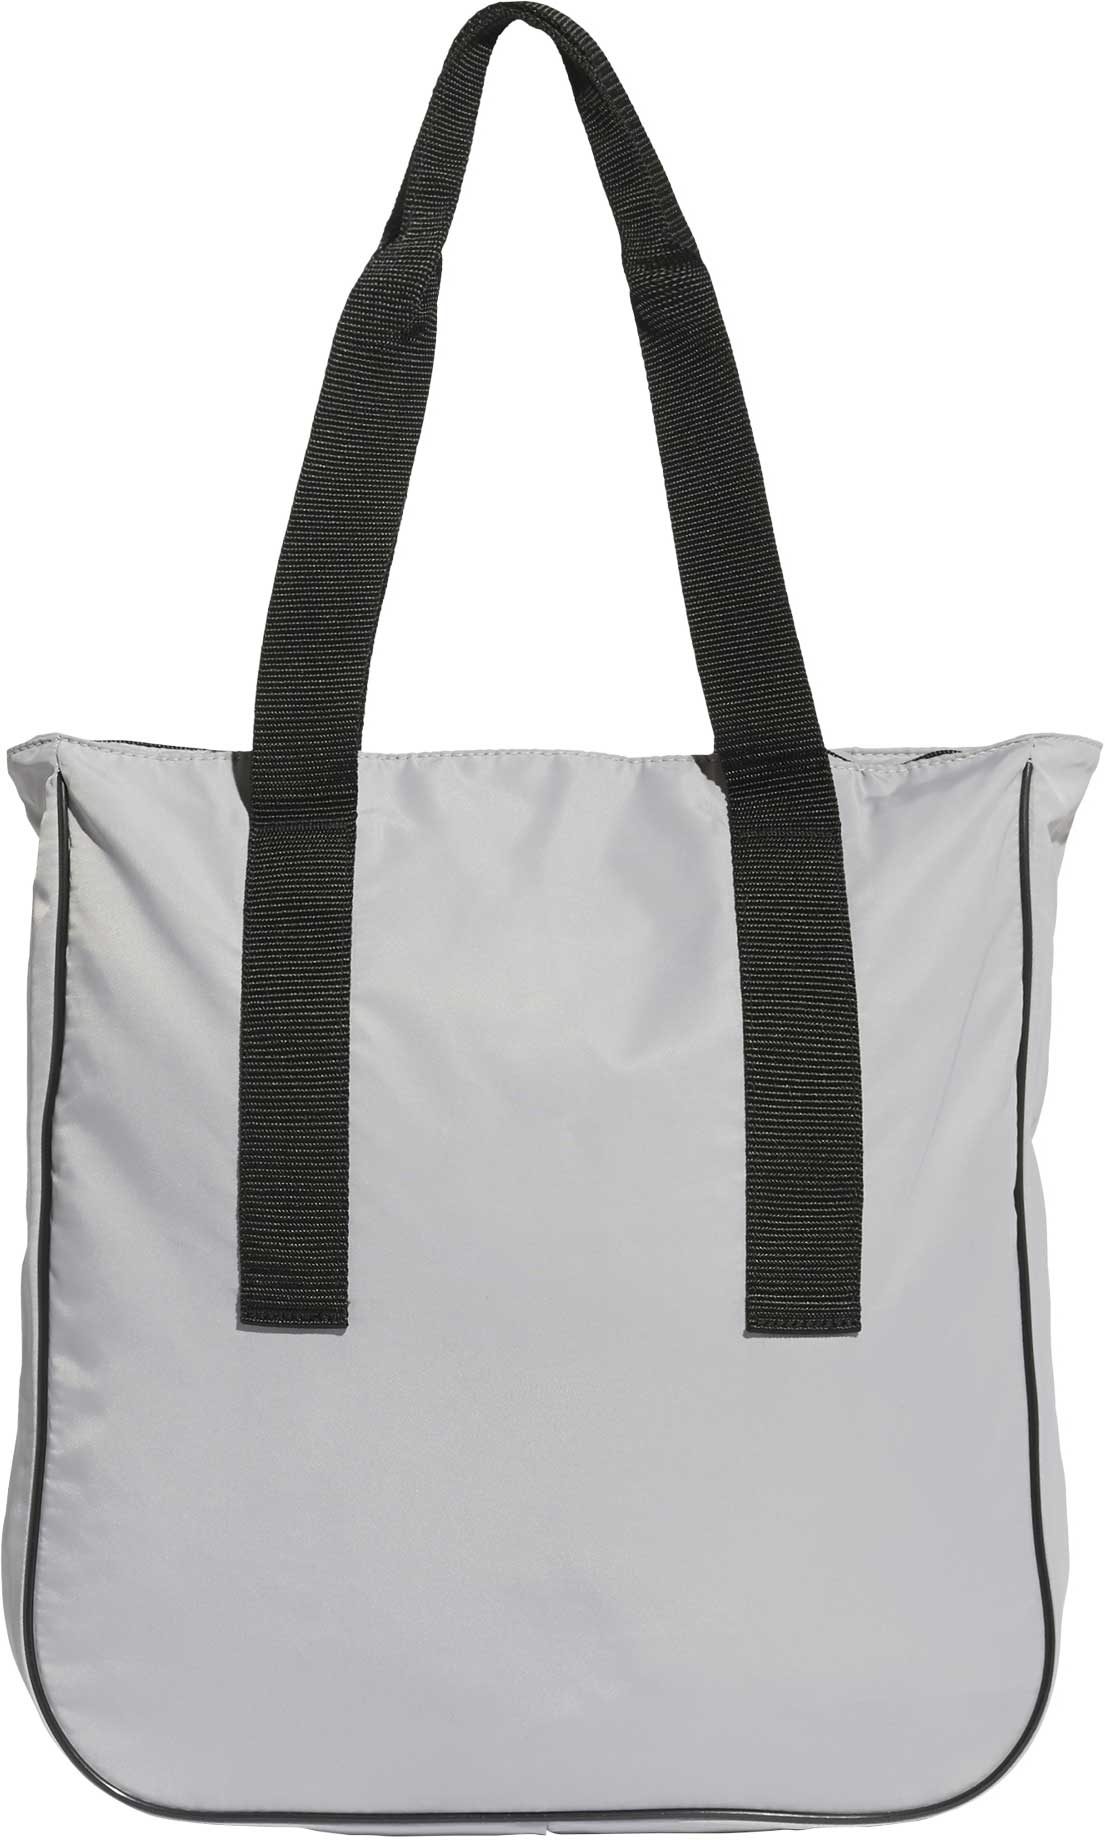 Women's shoulder bag